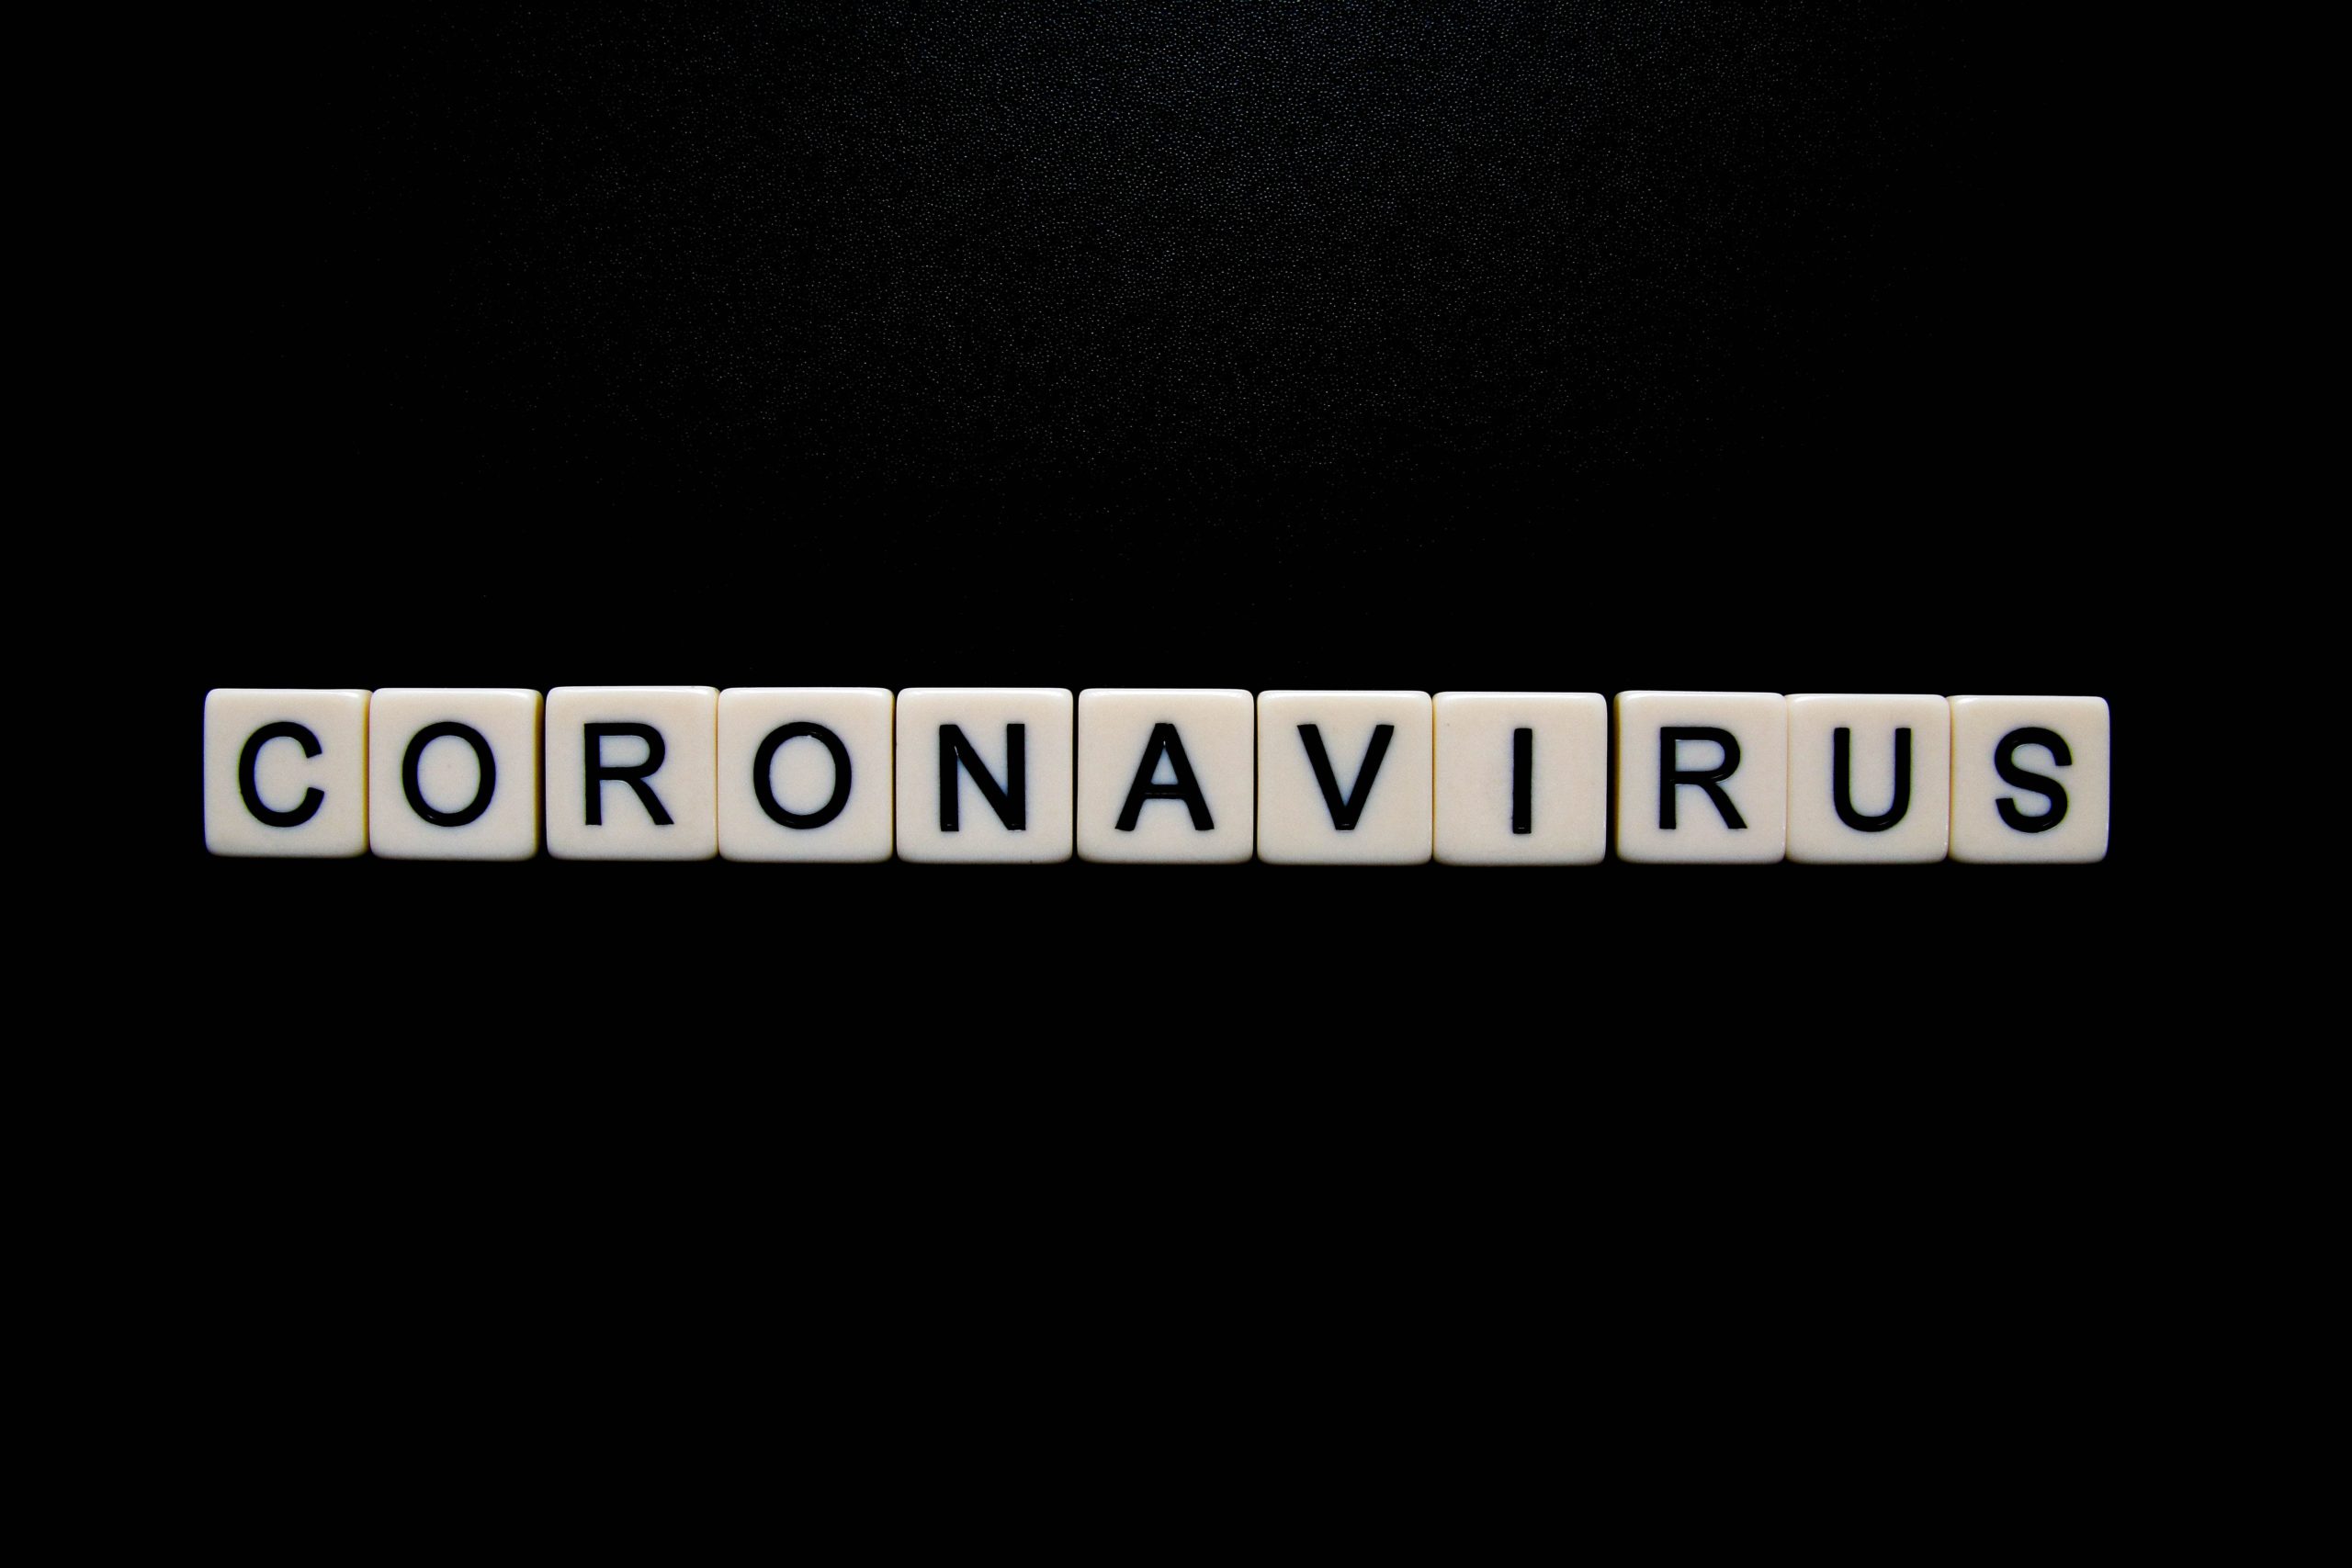 Coronavirus on black background